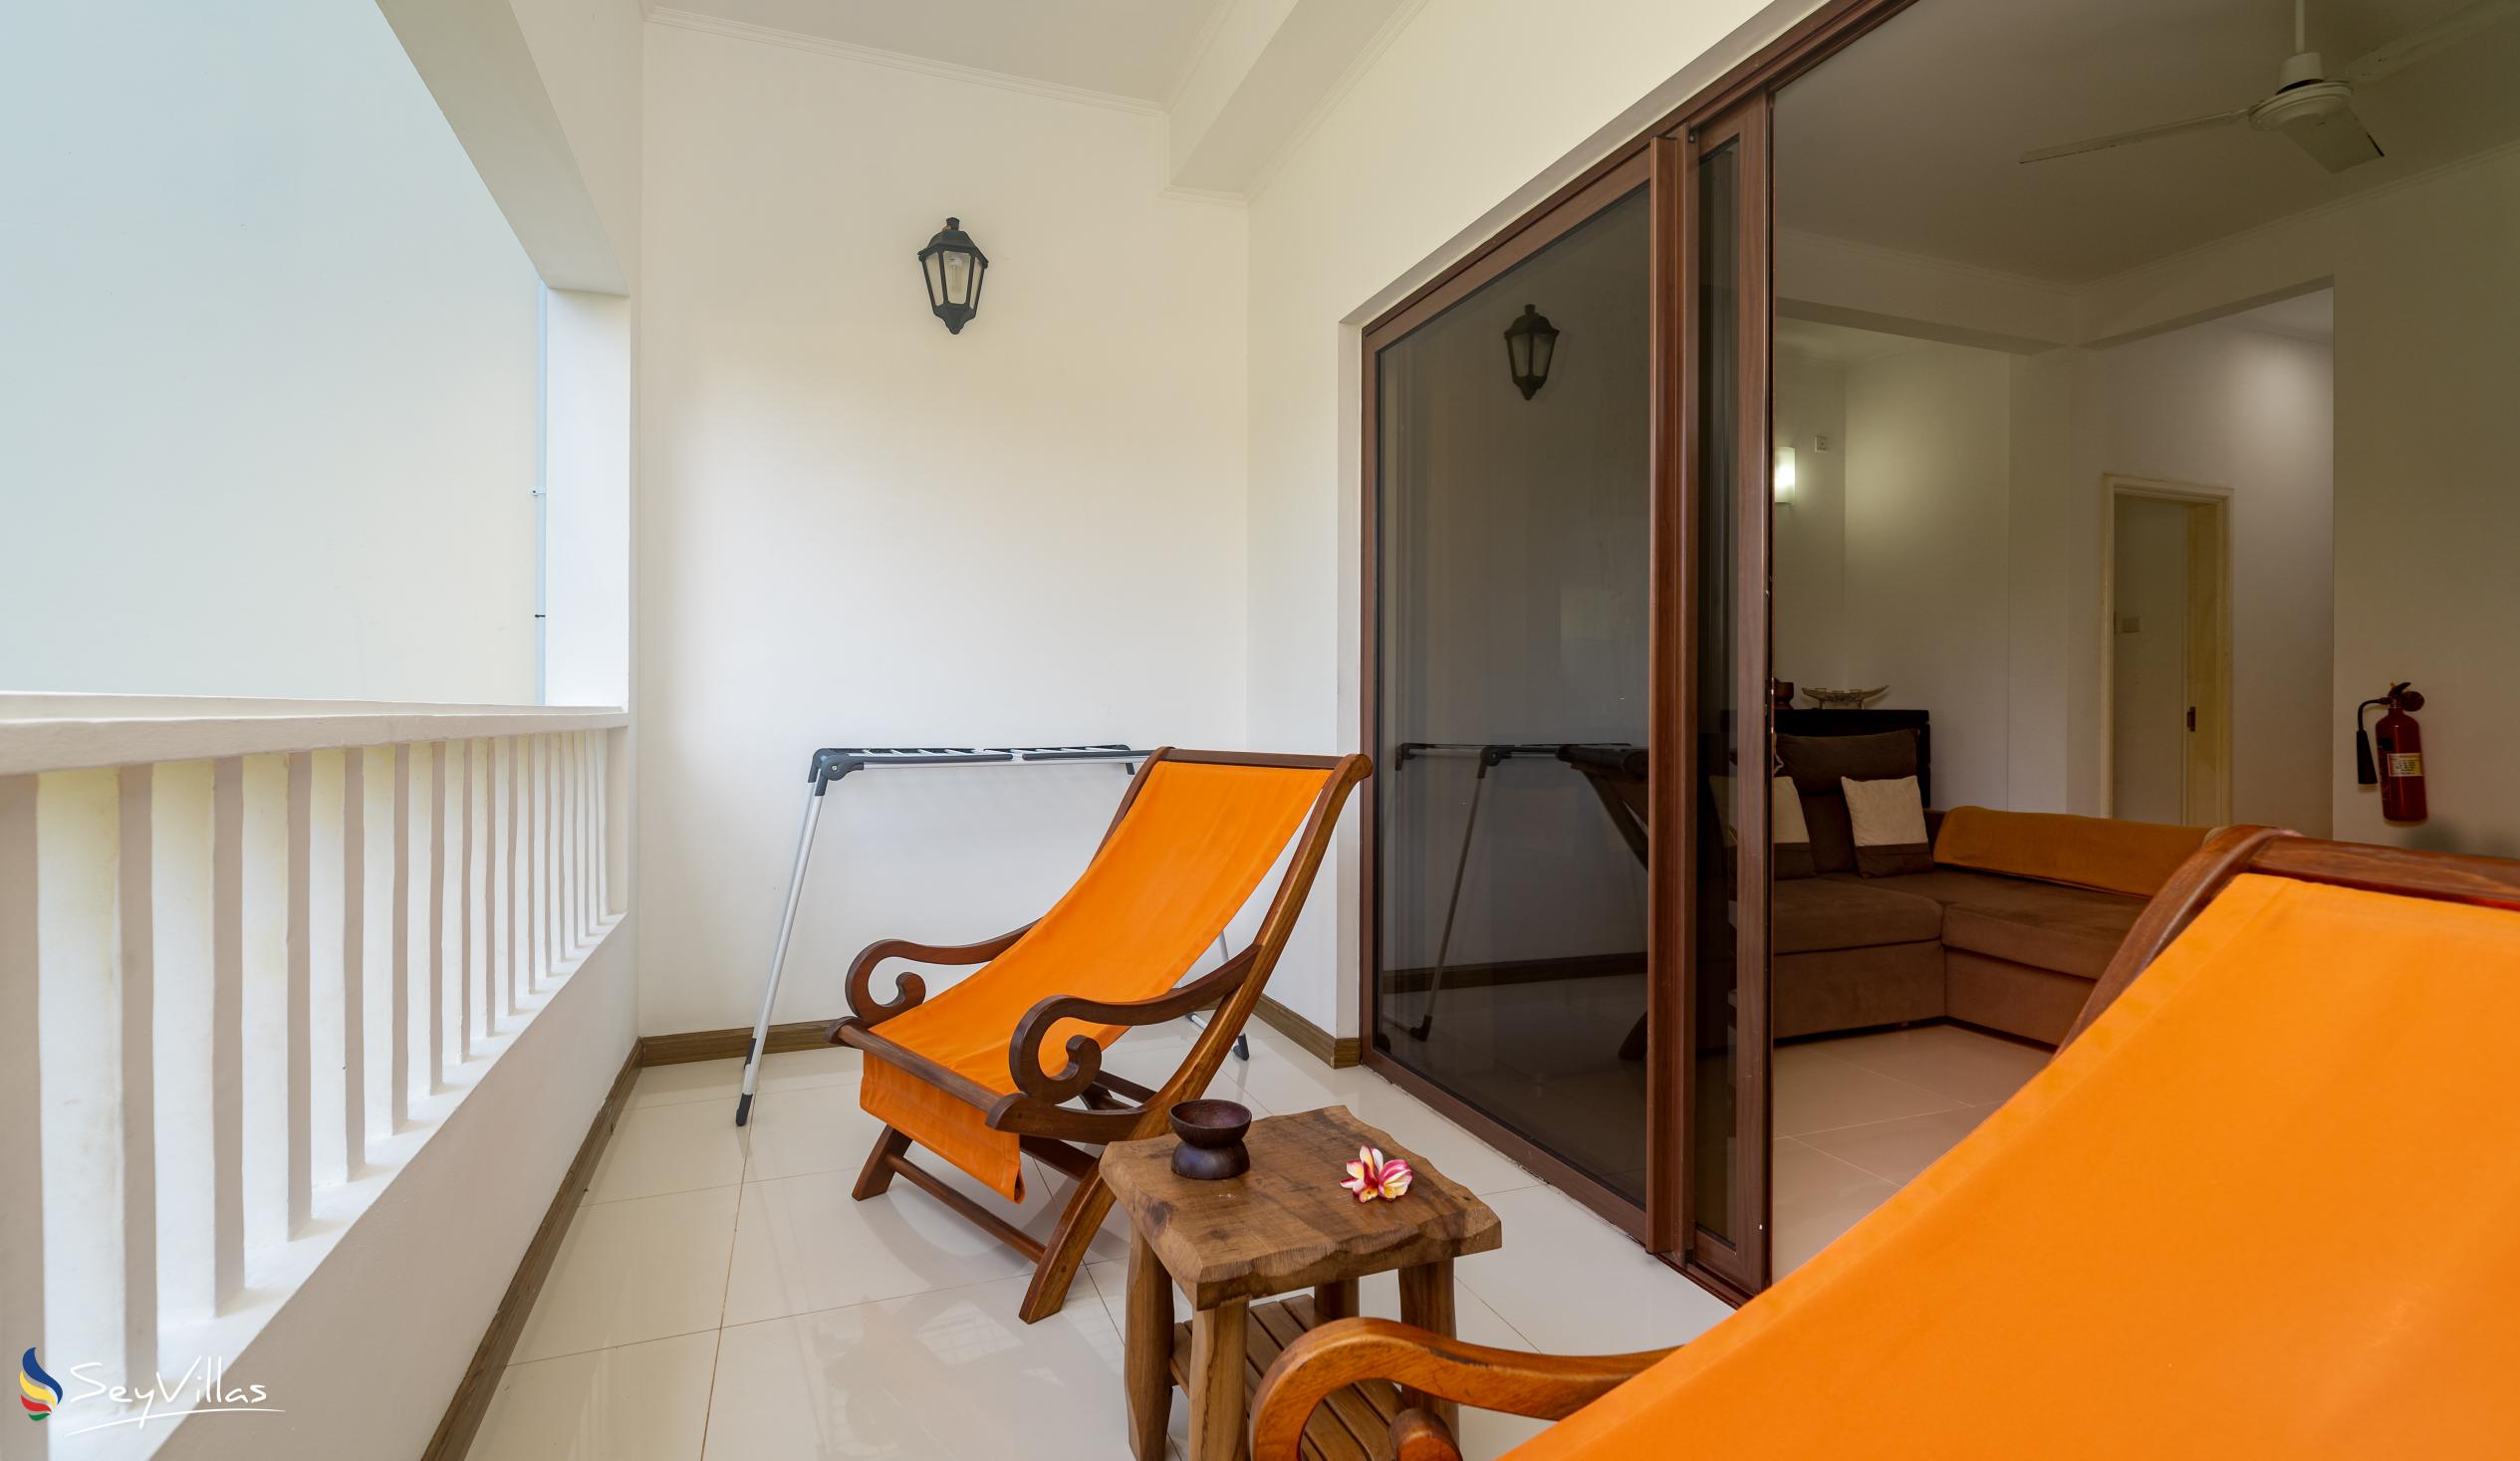 Foto 20: Kanasuk Self Catering Apartments - Appartamento Cinnamon con 2 camere - Mahé (Seychelles)